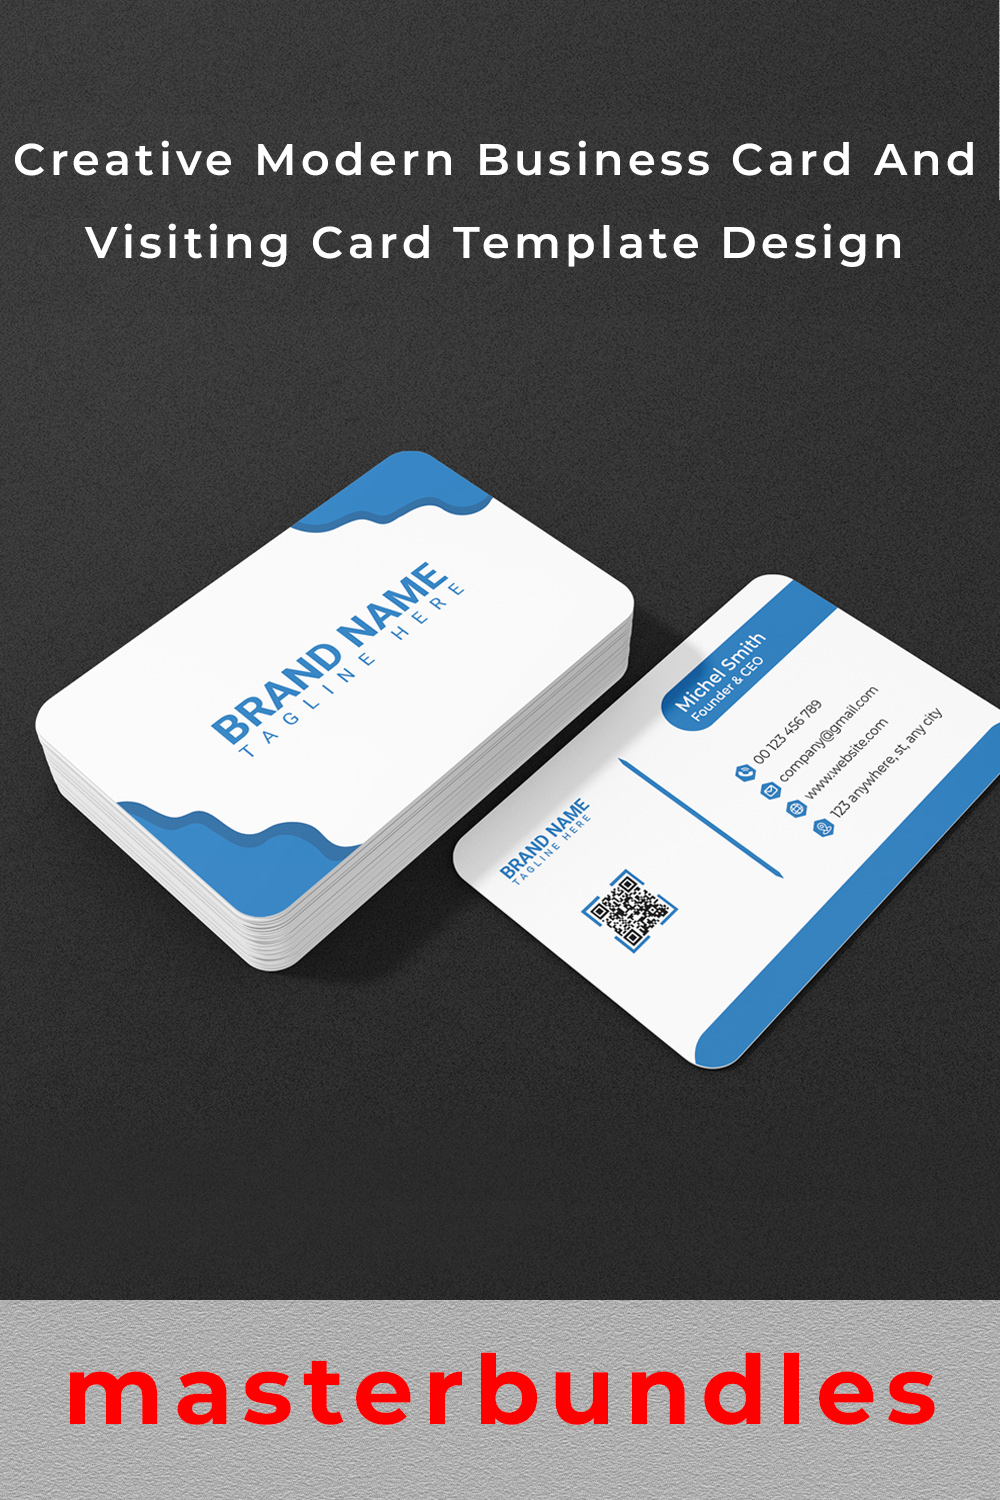 Creative Modern Business Card Template Design pinterest image.